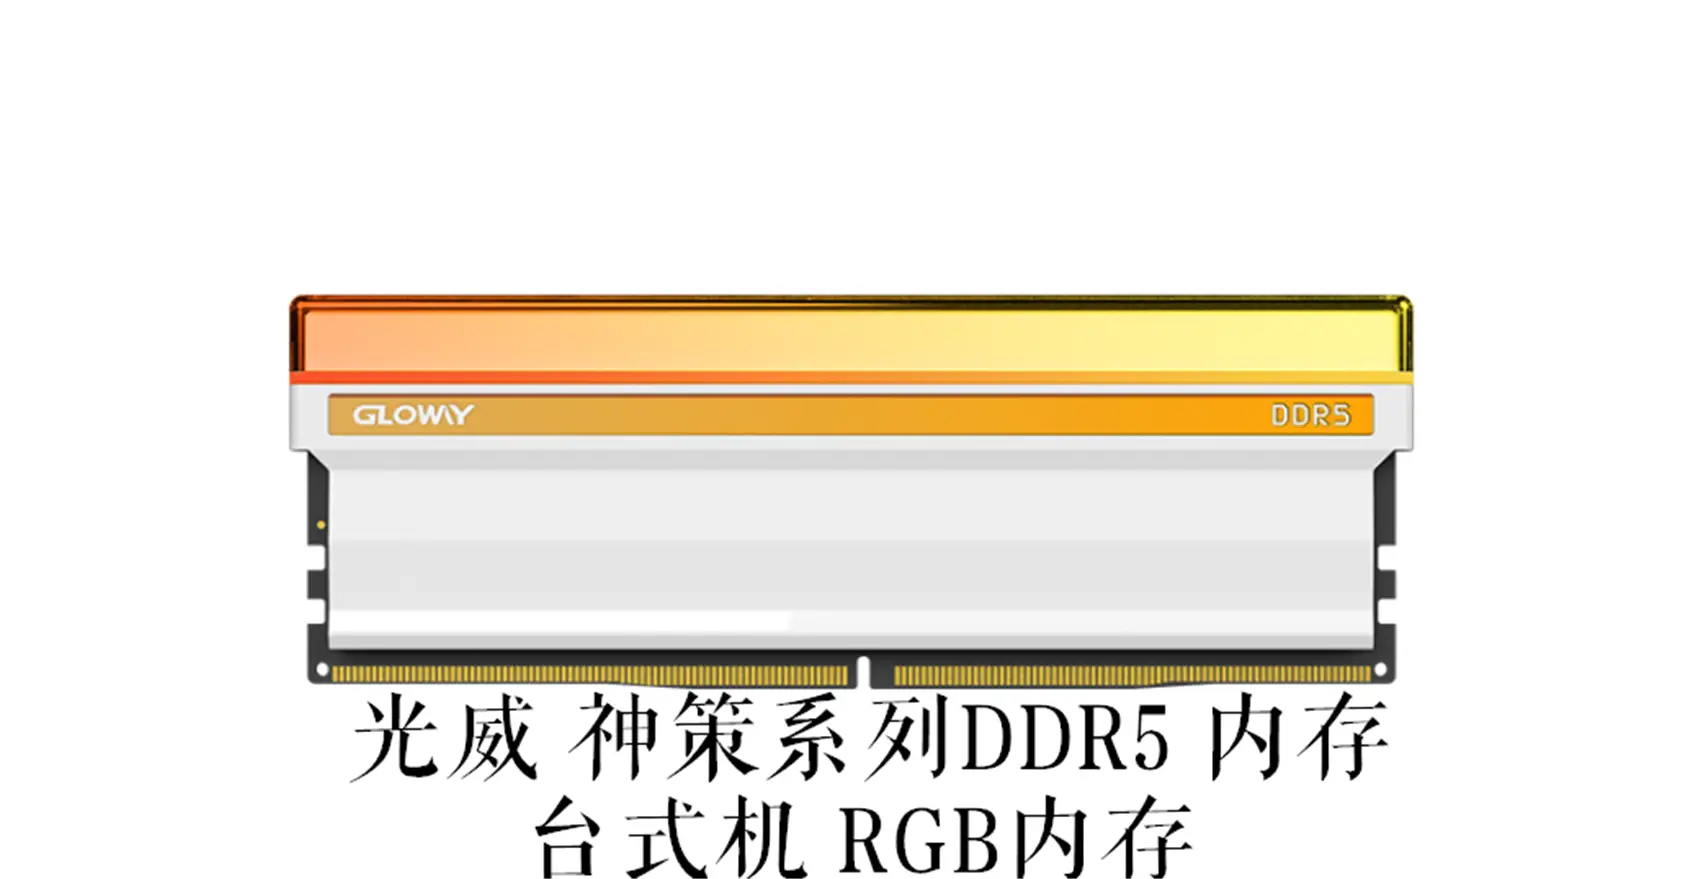 ddr3内存升级ddr5 深度剖析：DDR3升级到DDR5，全面解读技术特性与性能改善  第10张